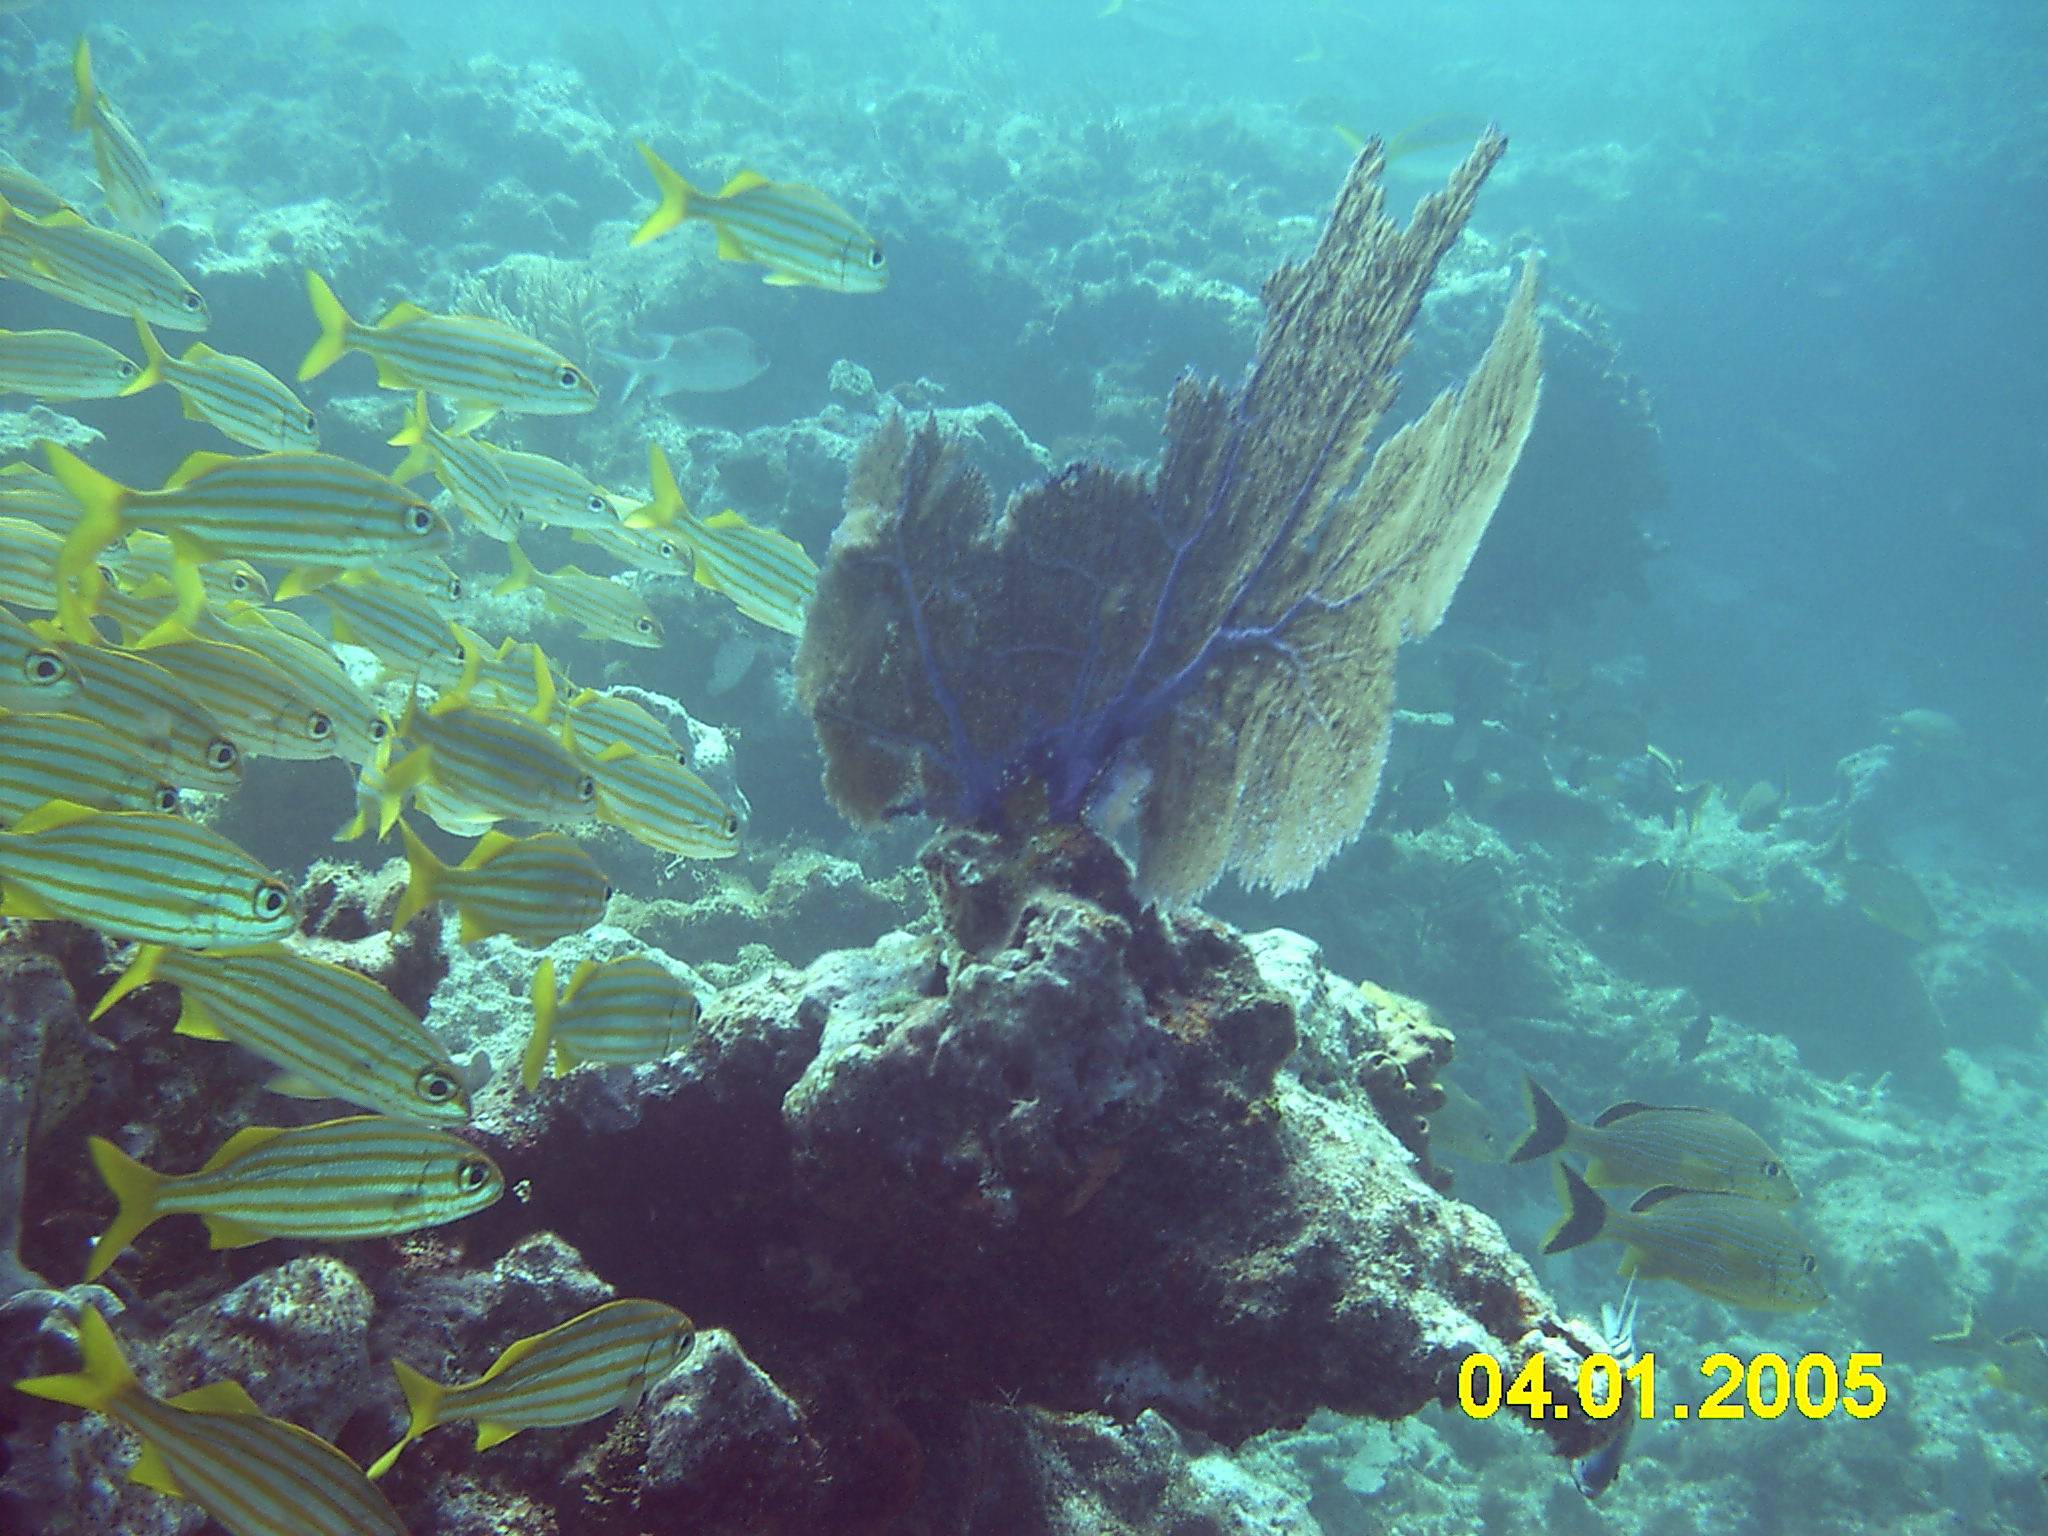 Spanish Reef off Key Largo